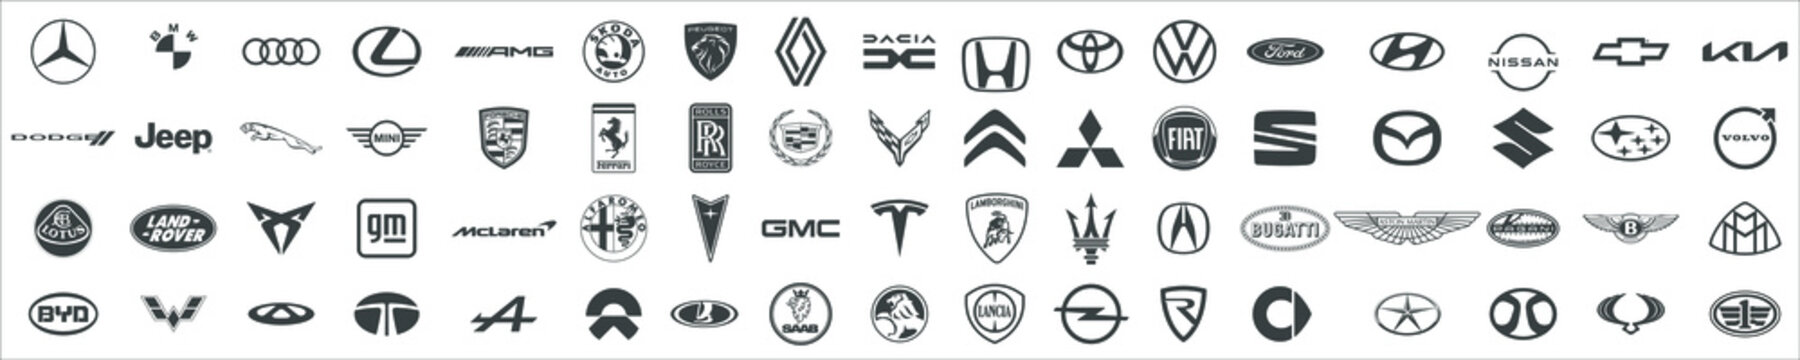 Set of popular logos of cars brands: Aston Martin, Rolls Royce, Porsche, Ferrari, Audi, Mercedes, BMW, McLaren, Maserati, Maybach, Lamborghini, Cadillac, Corvette, Bugatti, Pontiac, Vector 